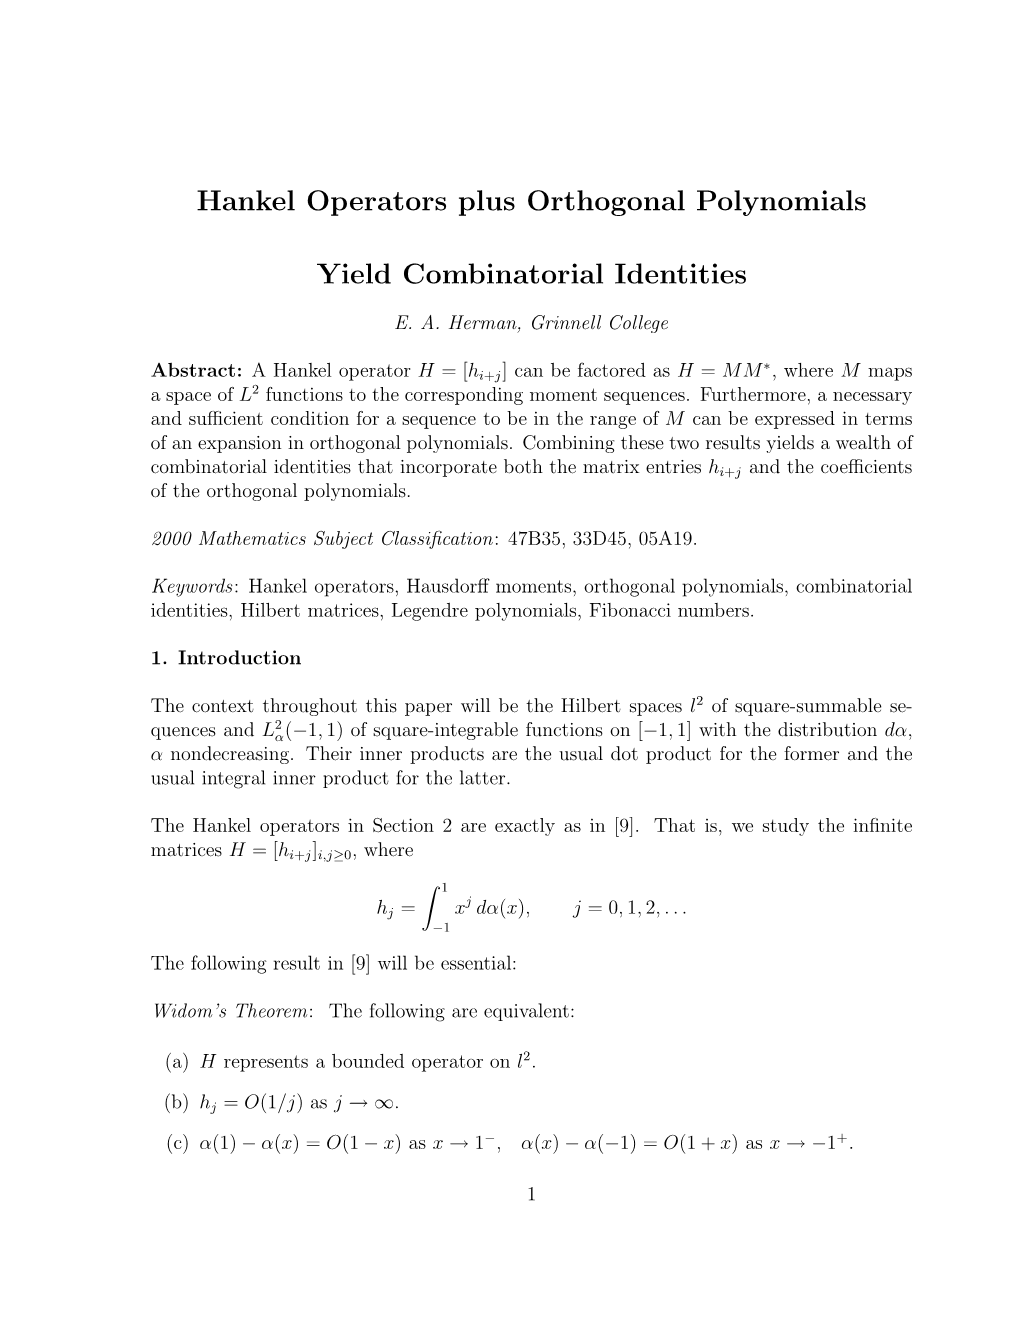 Hankel Operators Plus Orthogonal Polynomials Yield Combinatorial Identities